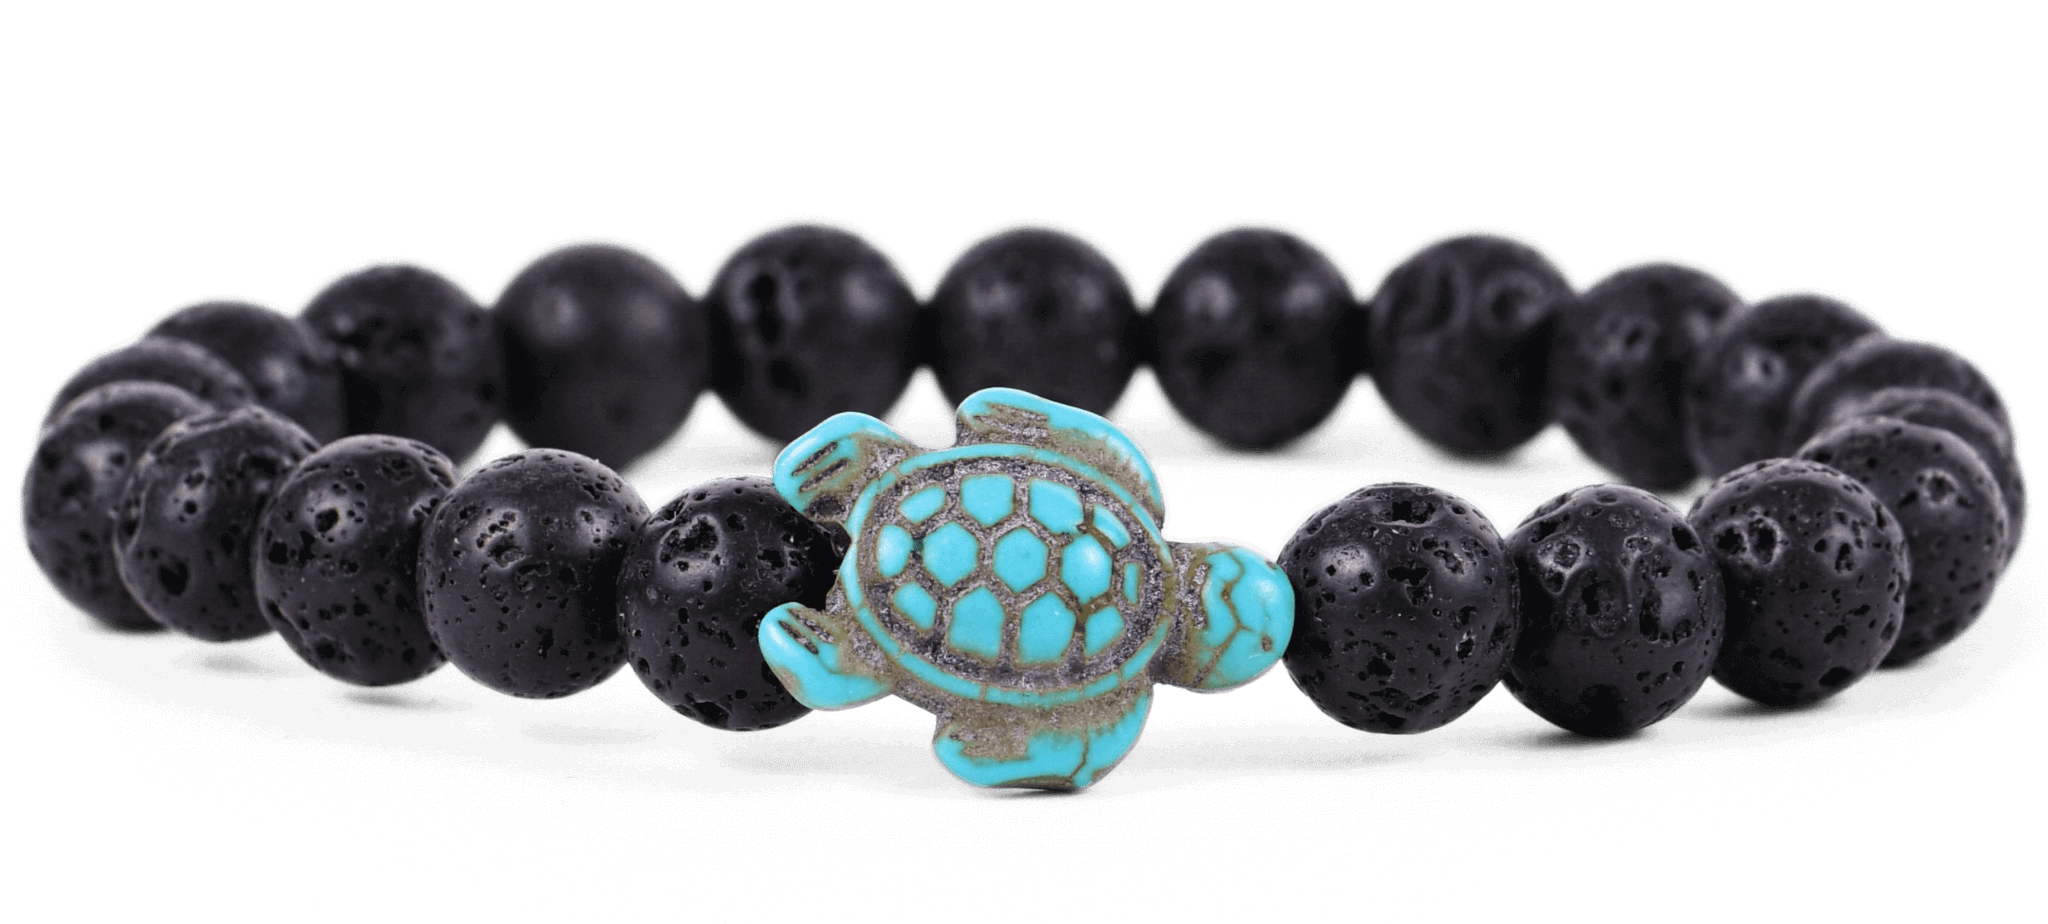 The Journey Bracelet - Lava Stone - Sea Turtle